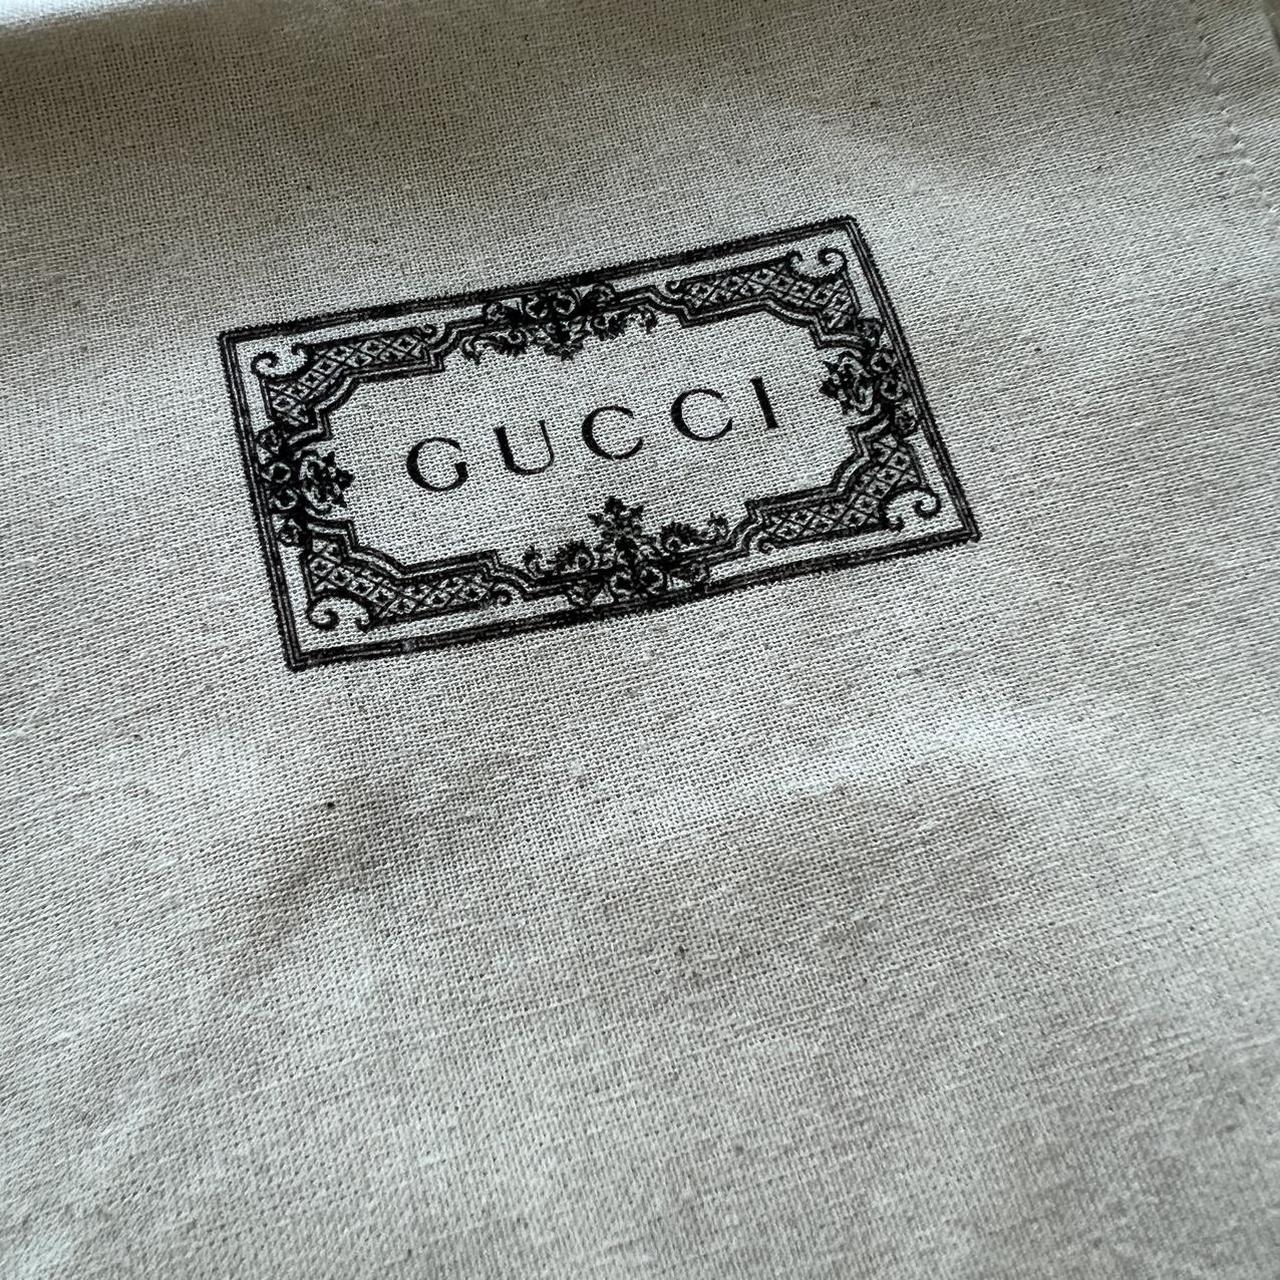 Gucci Women's Tan and Cream Bag (2)